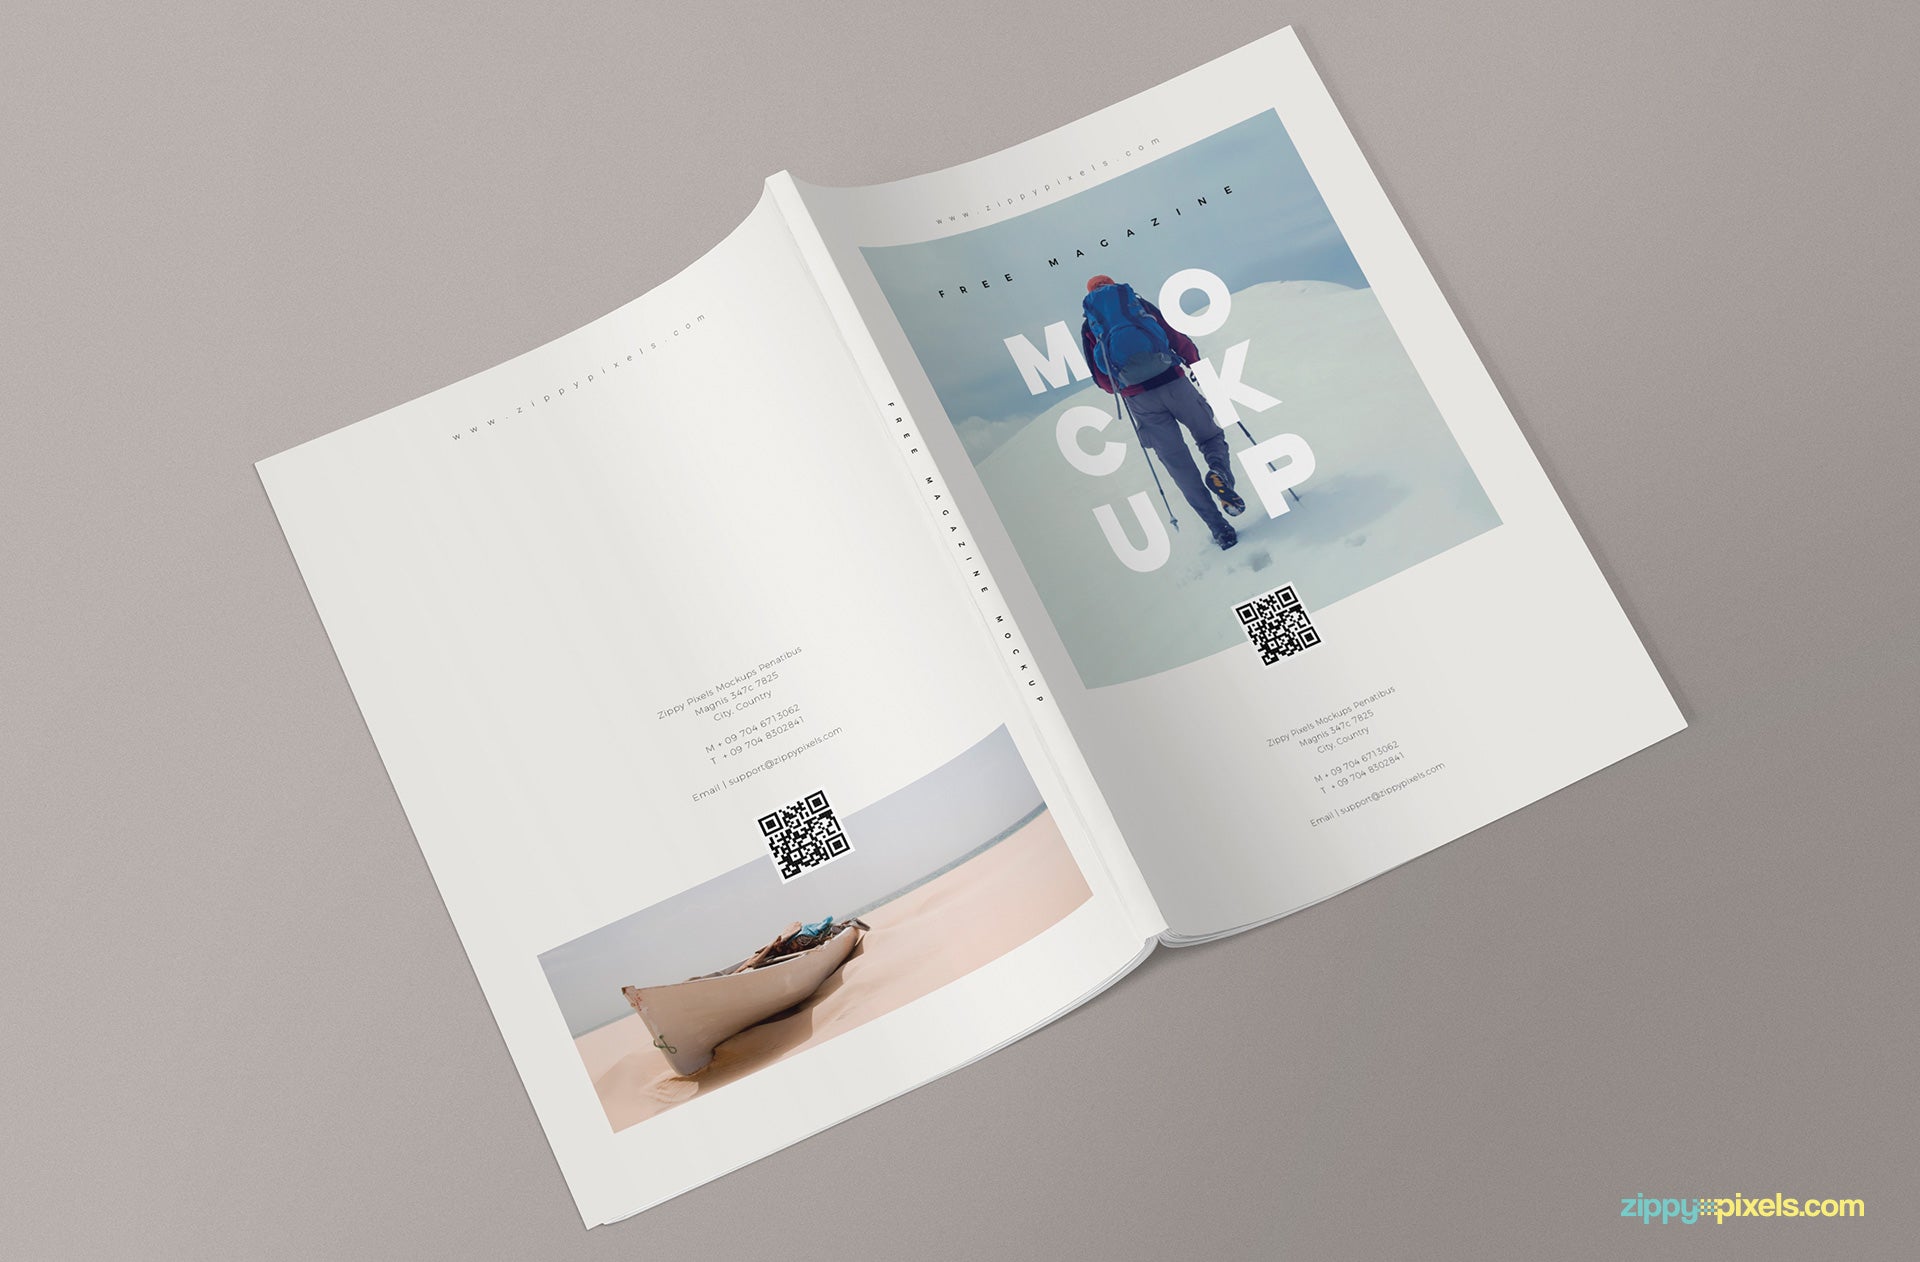 Download Free 3 Magazine Mockup Design Templates - CreativeBooster